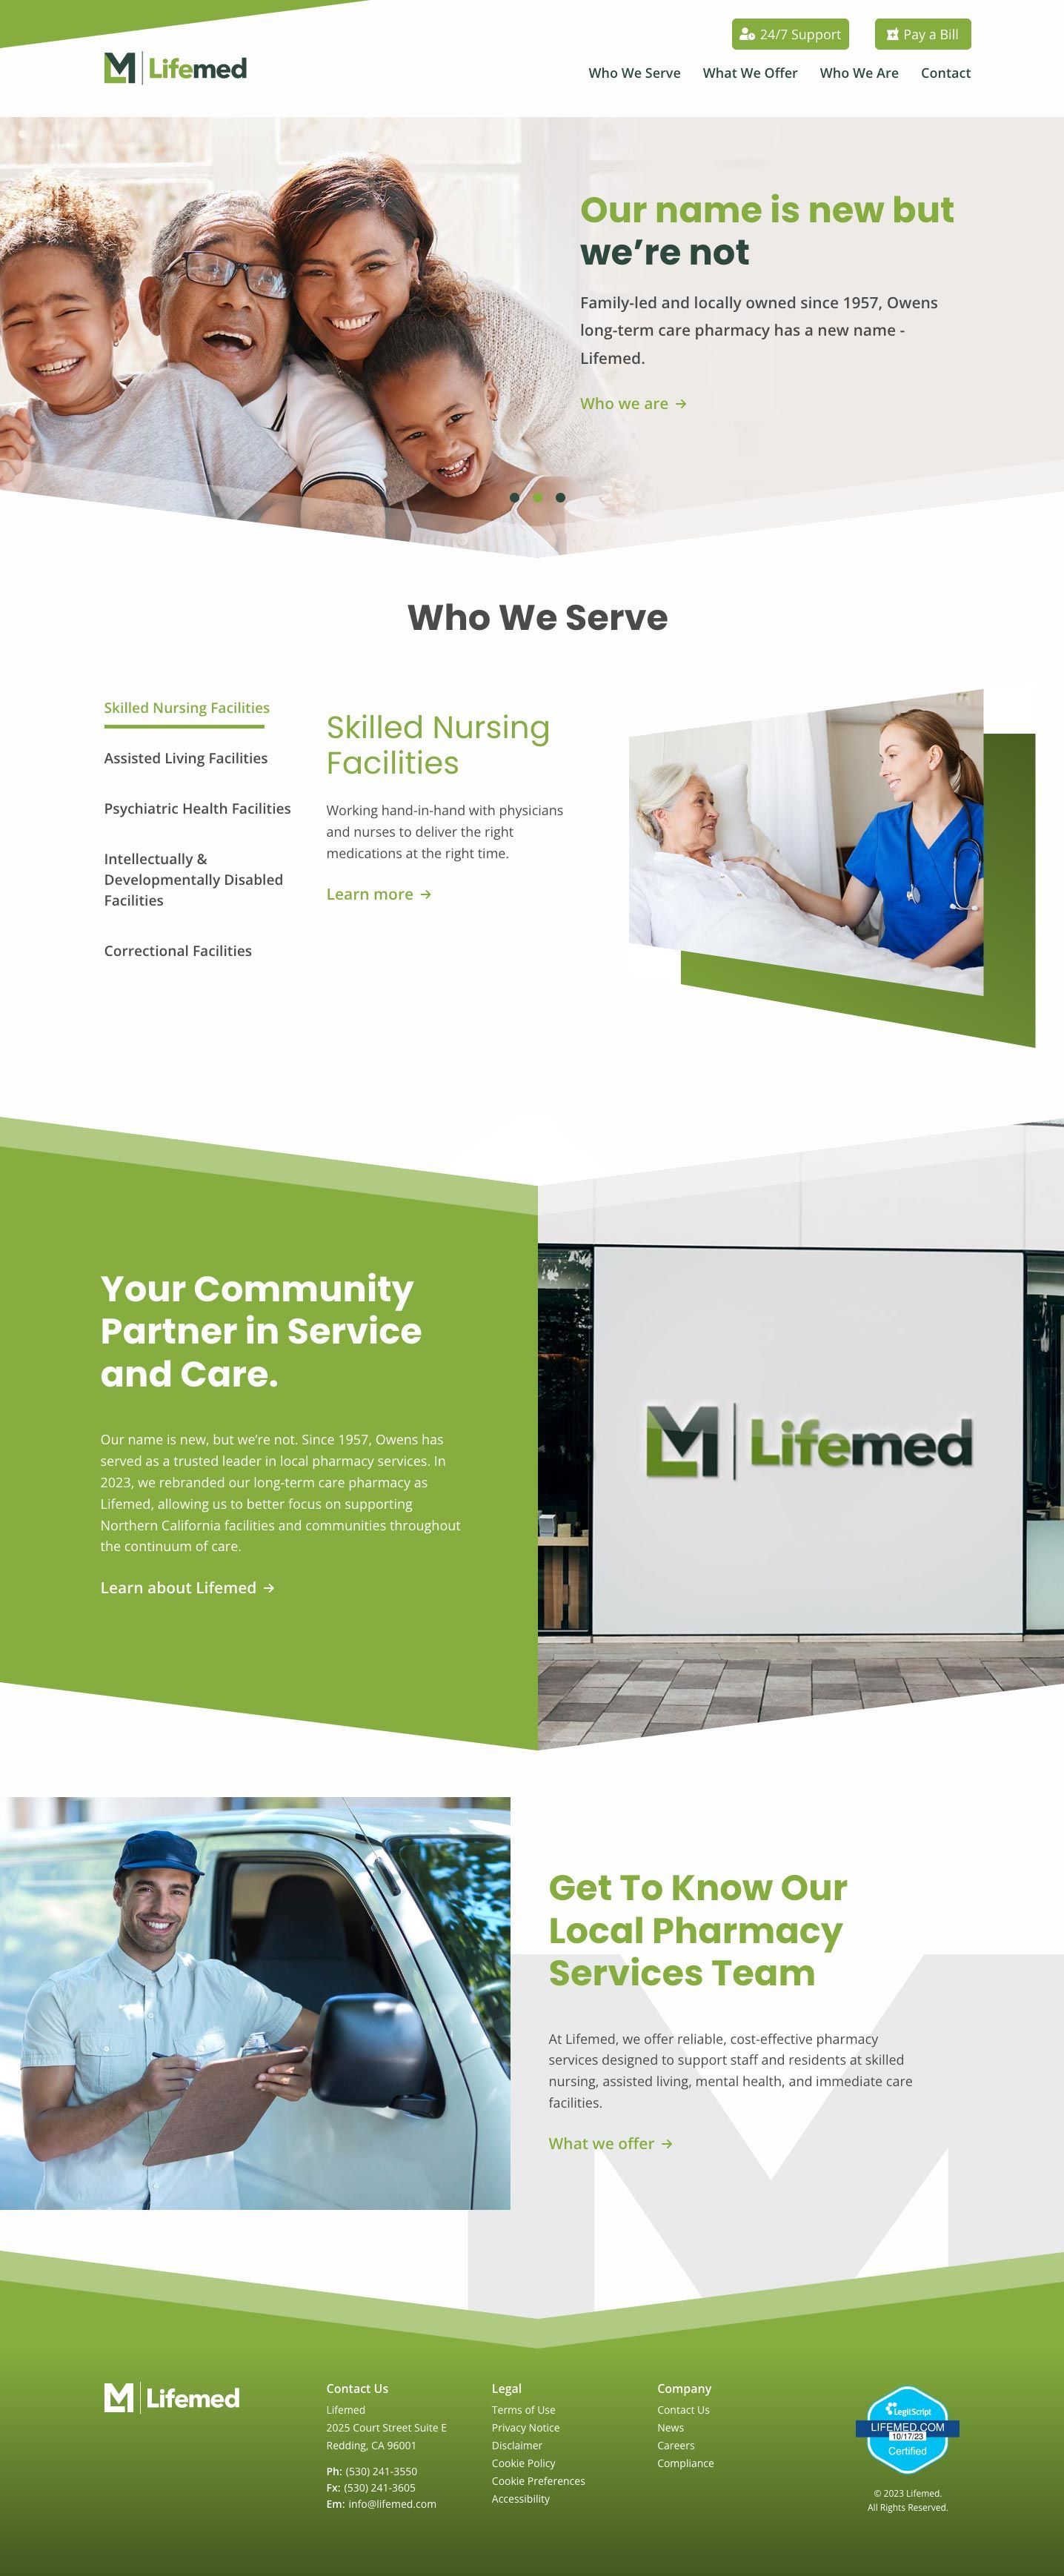 Lifemed Long-Term Care Pharmacy Website